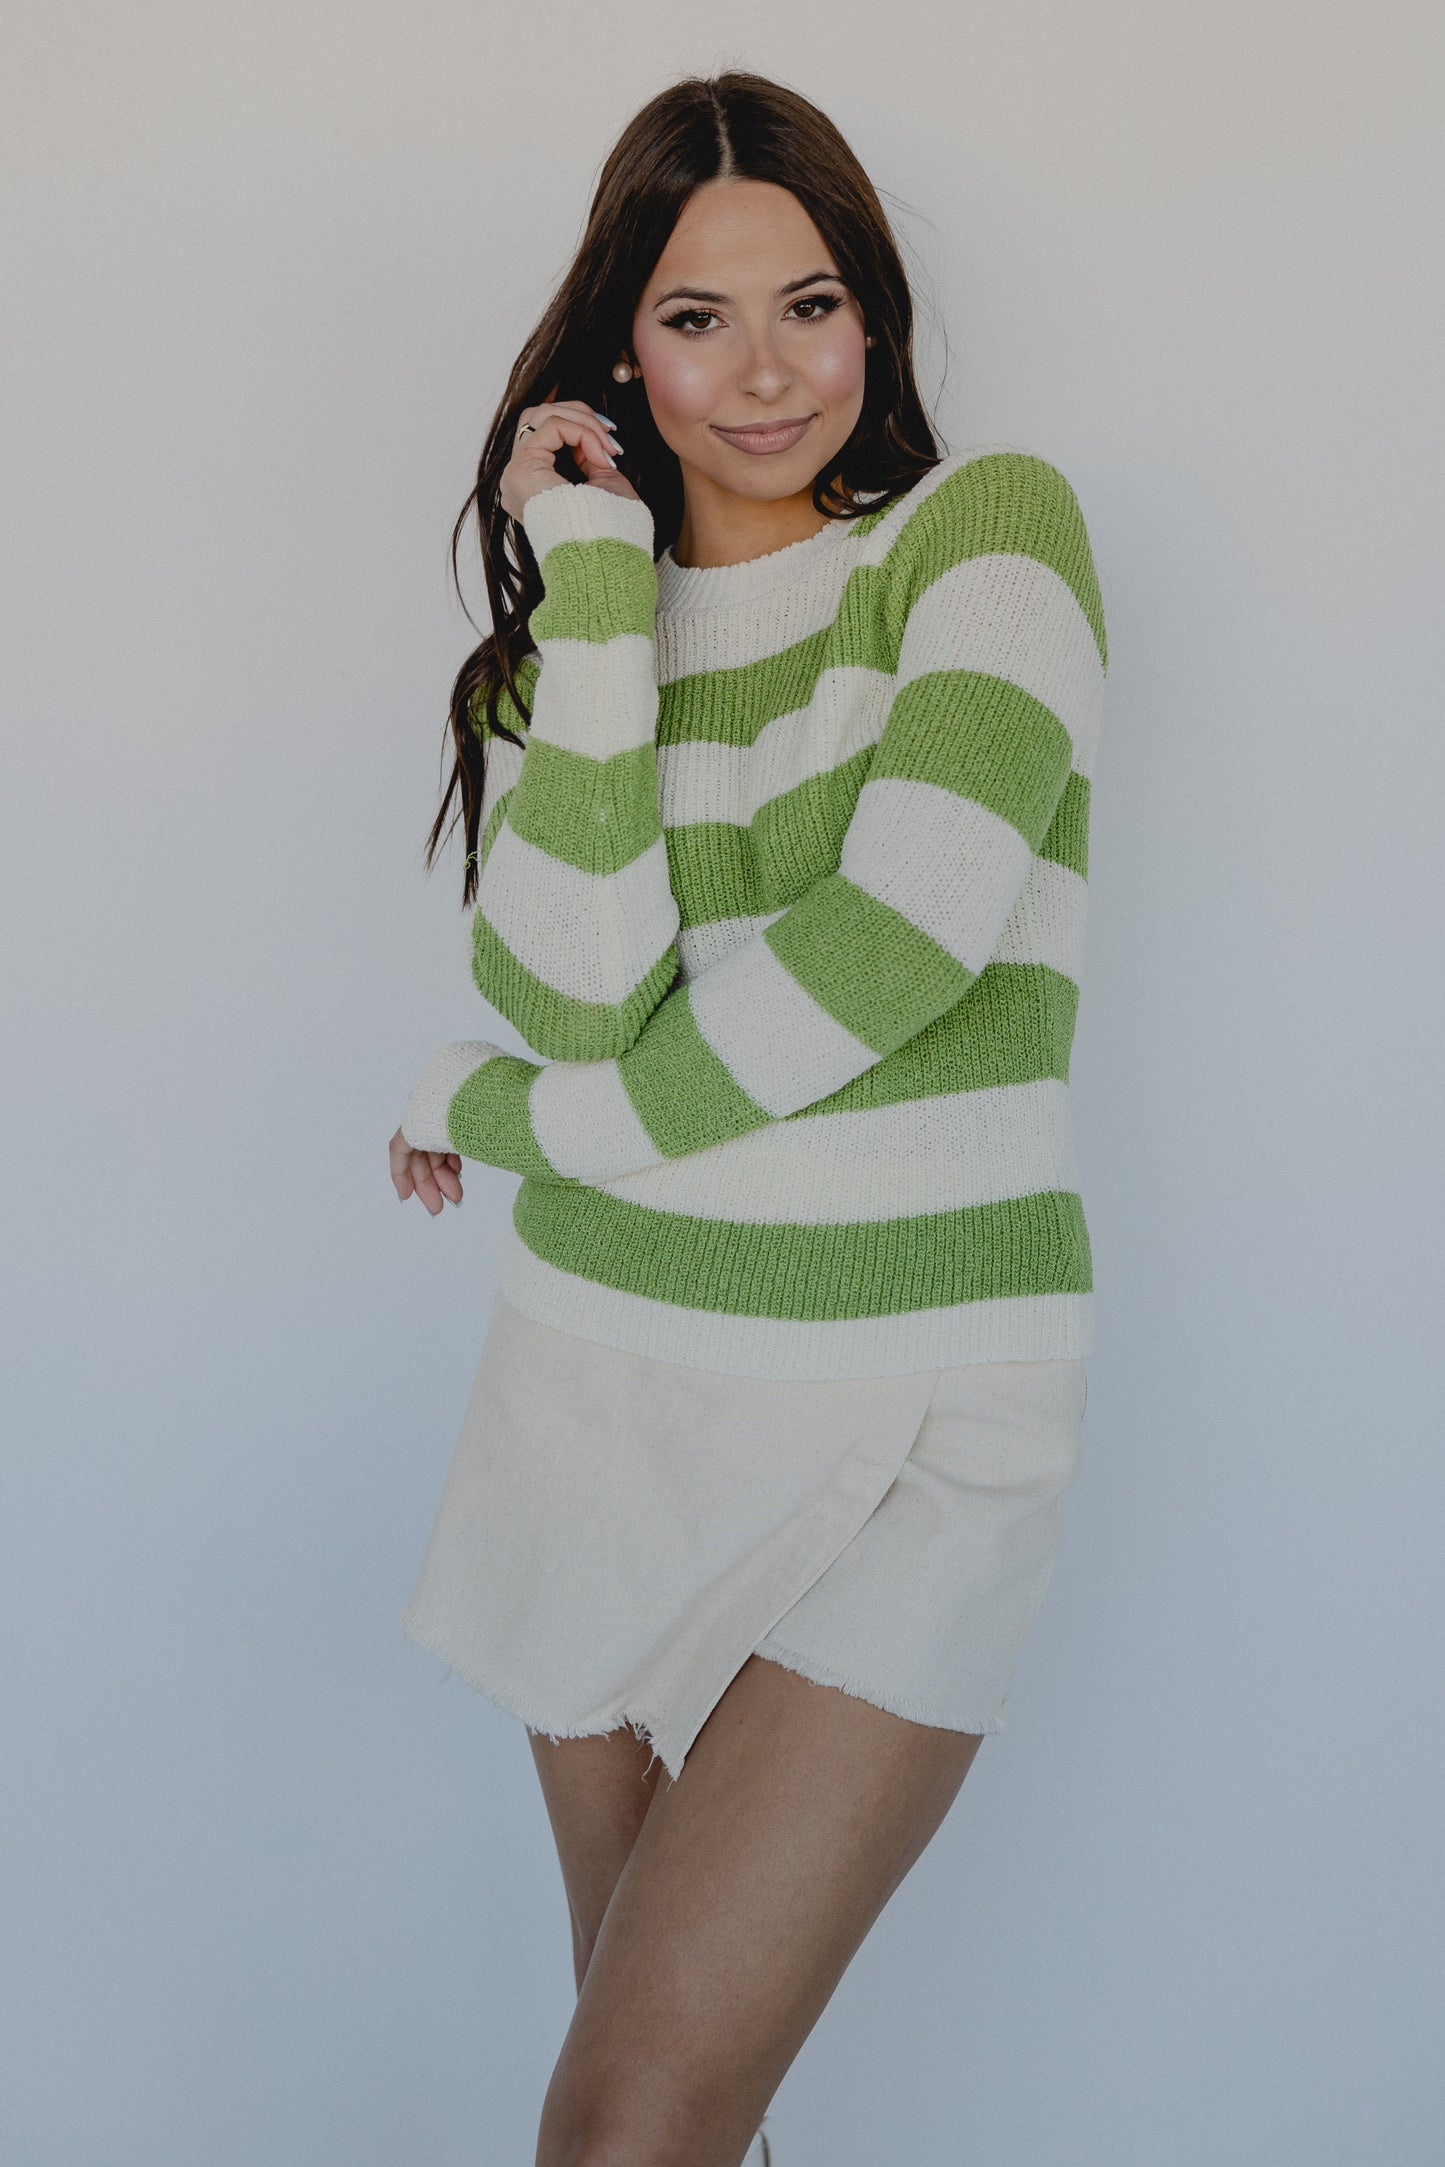 Key Lime Pie Stripe Sweater